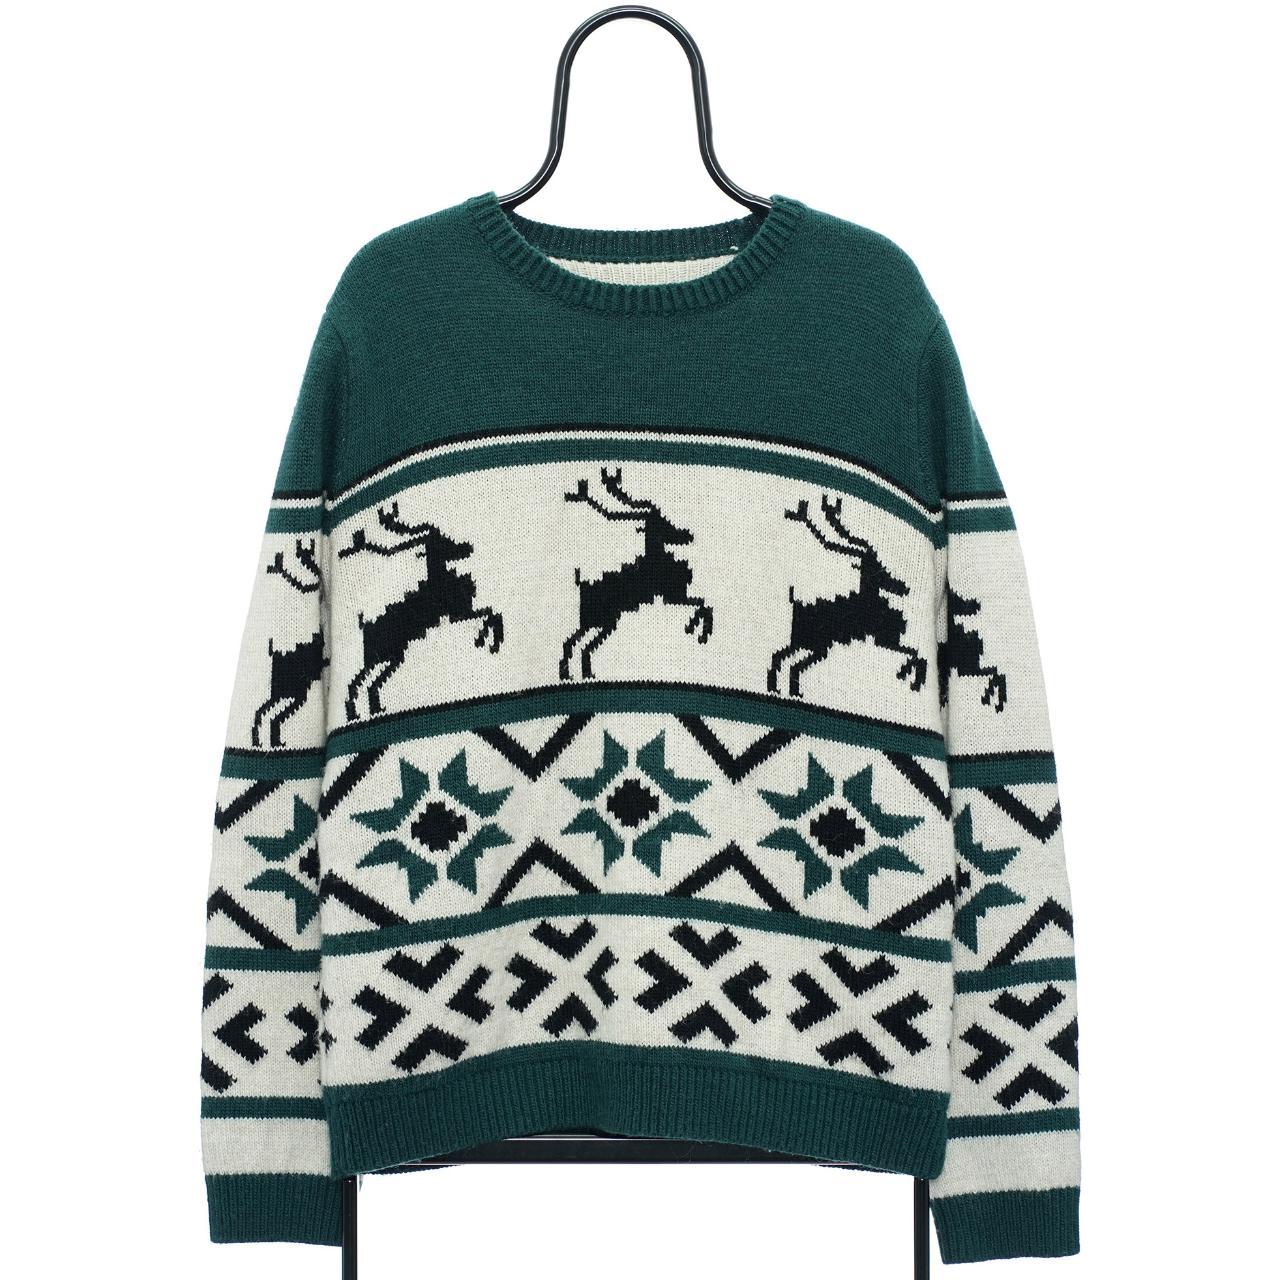 Vintage Christmas Reindeer Knitted Green Jumper •... - Depop